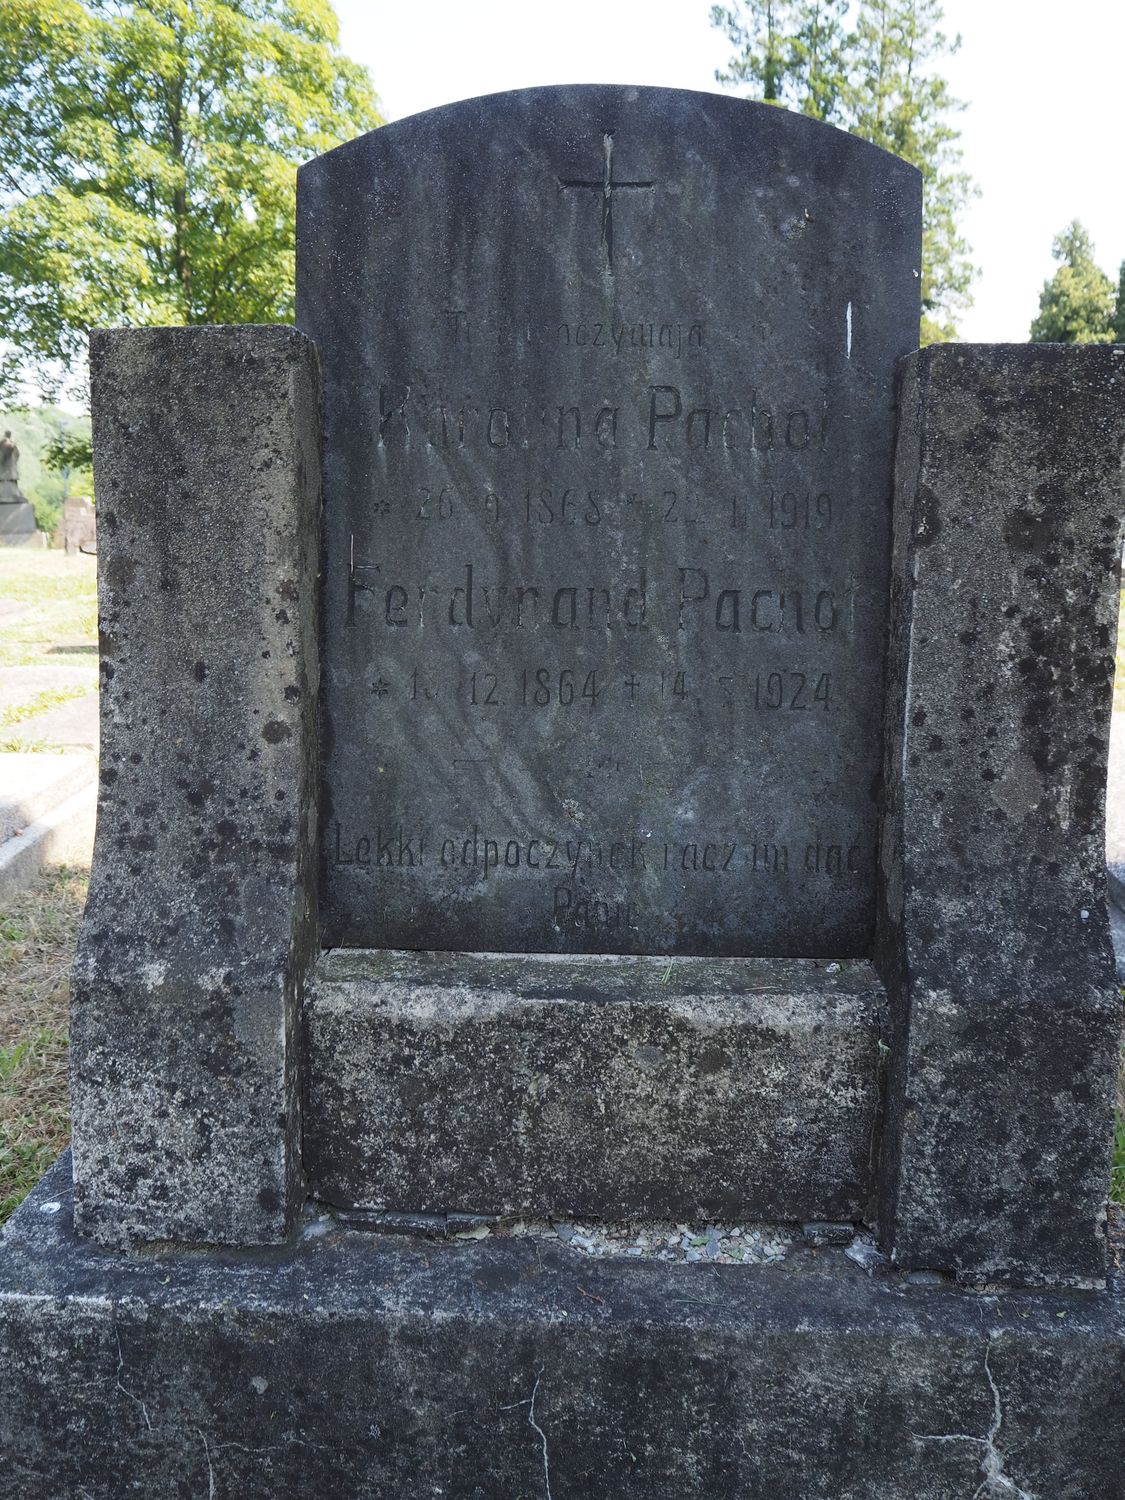 Tombstone of Ferdinand and Karolina Pachol, cemetery in Karviná Doły, as of 2022.